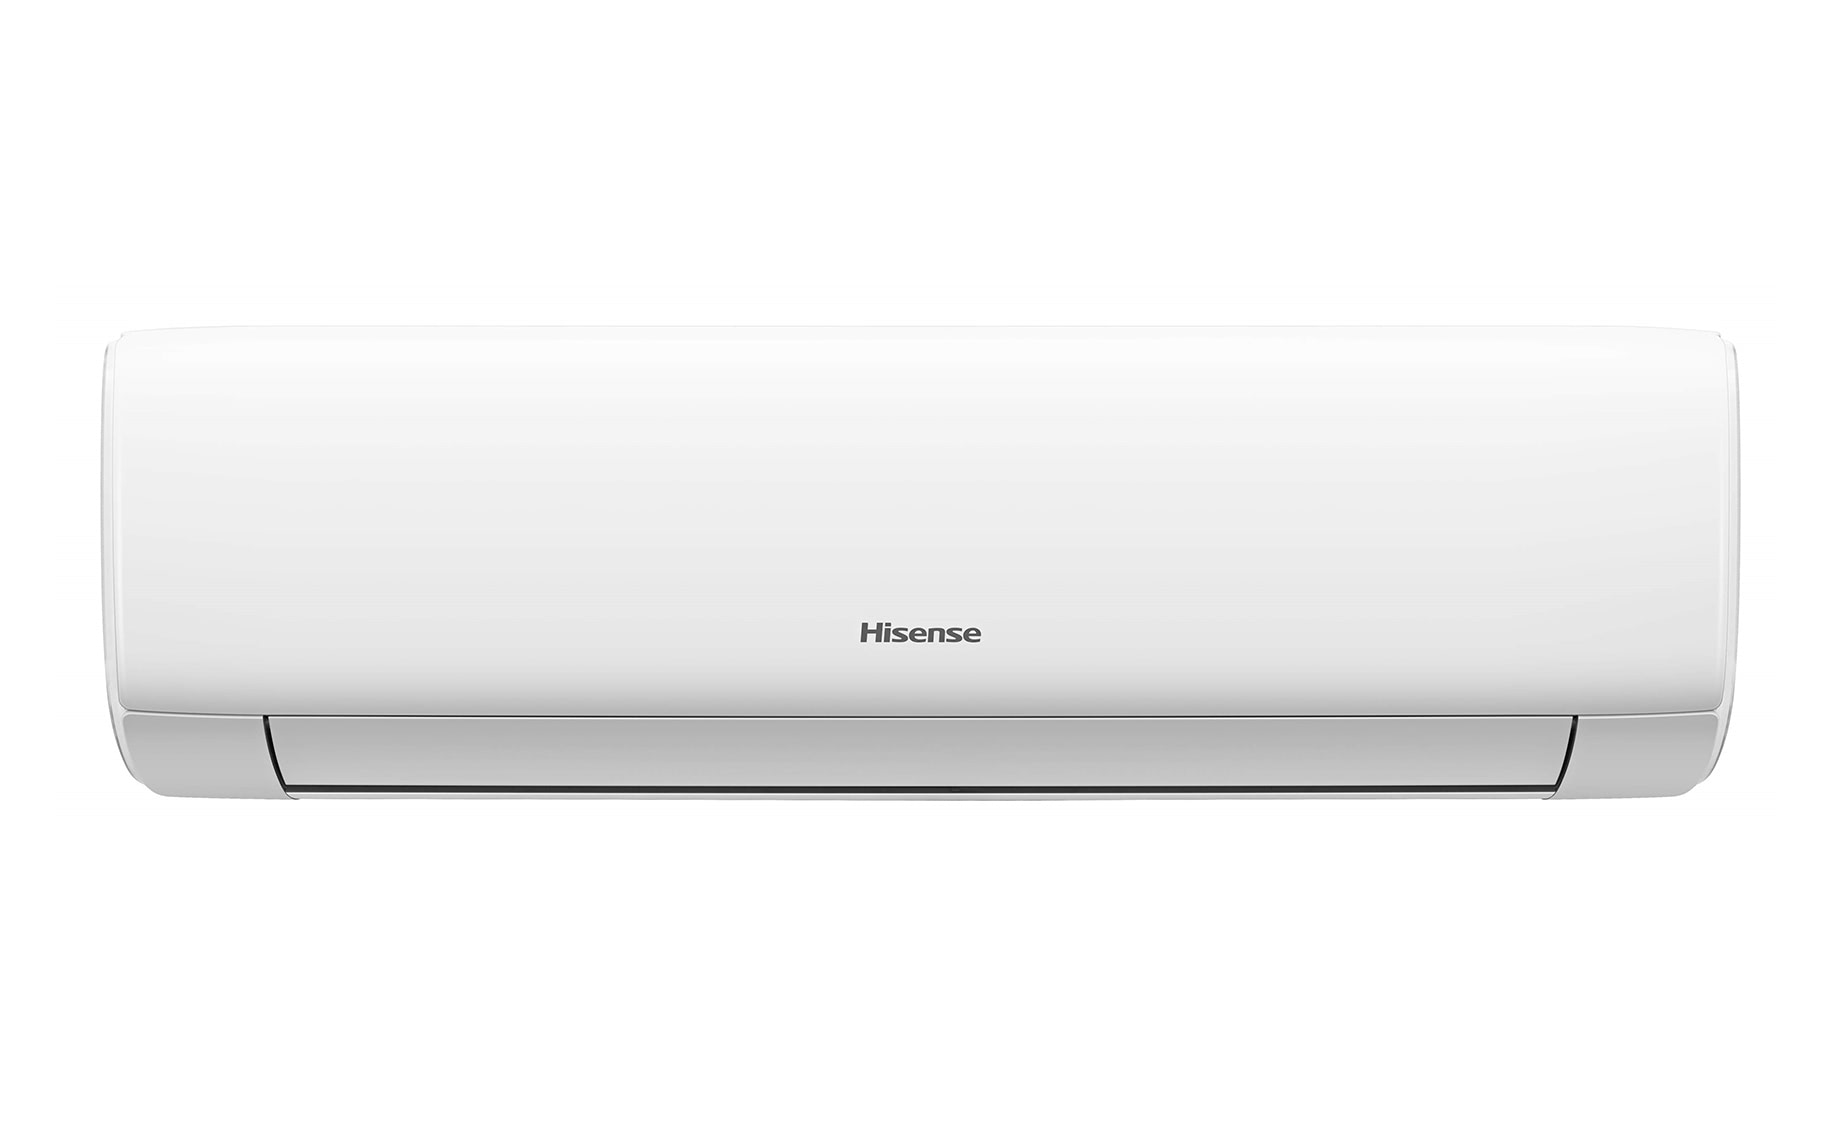 Hisense WINGS HINANO 12K - KB35YR3E klima uređaj